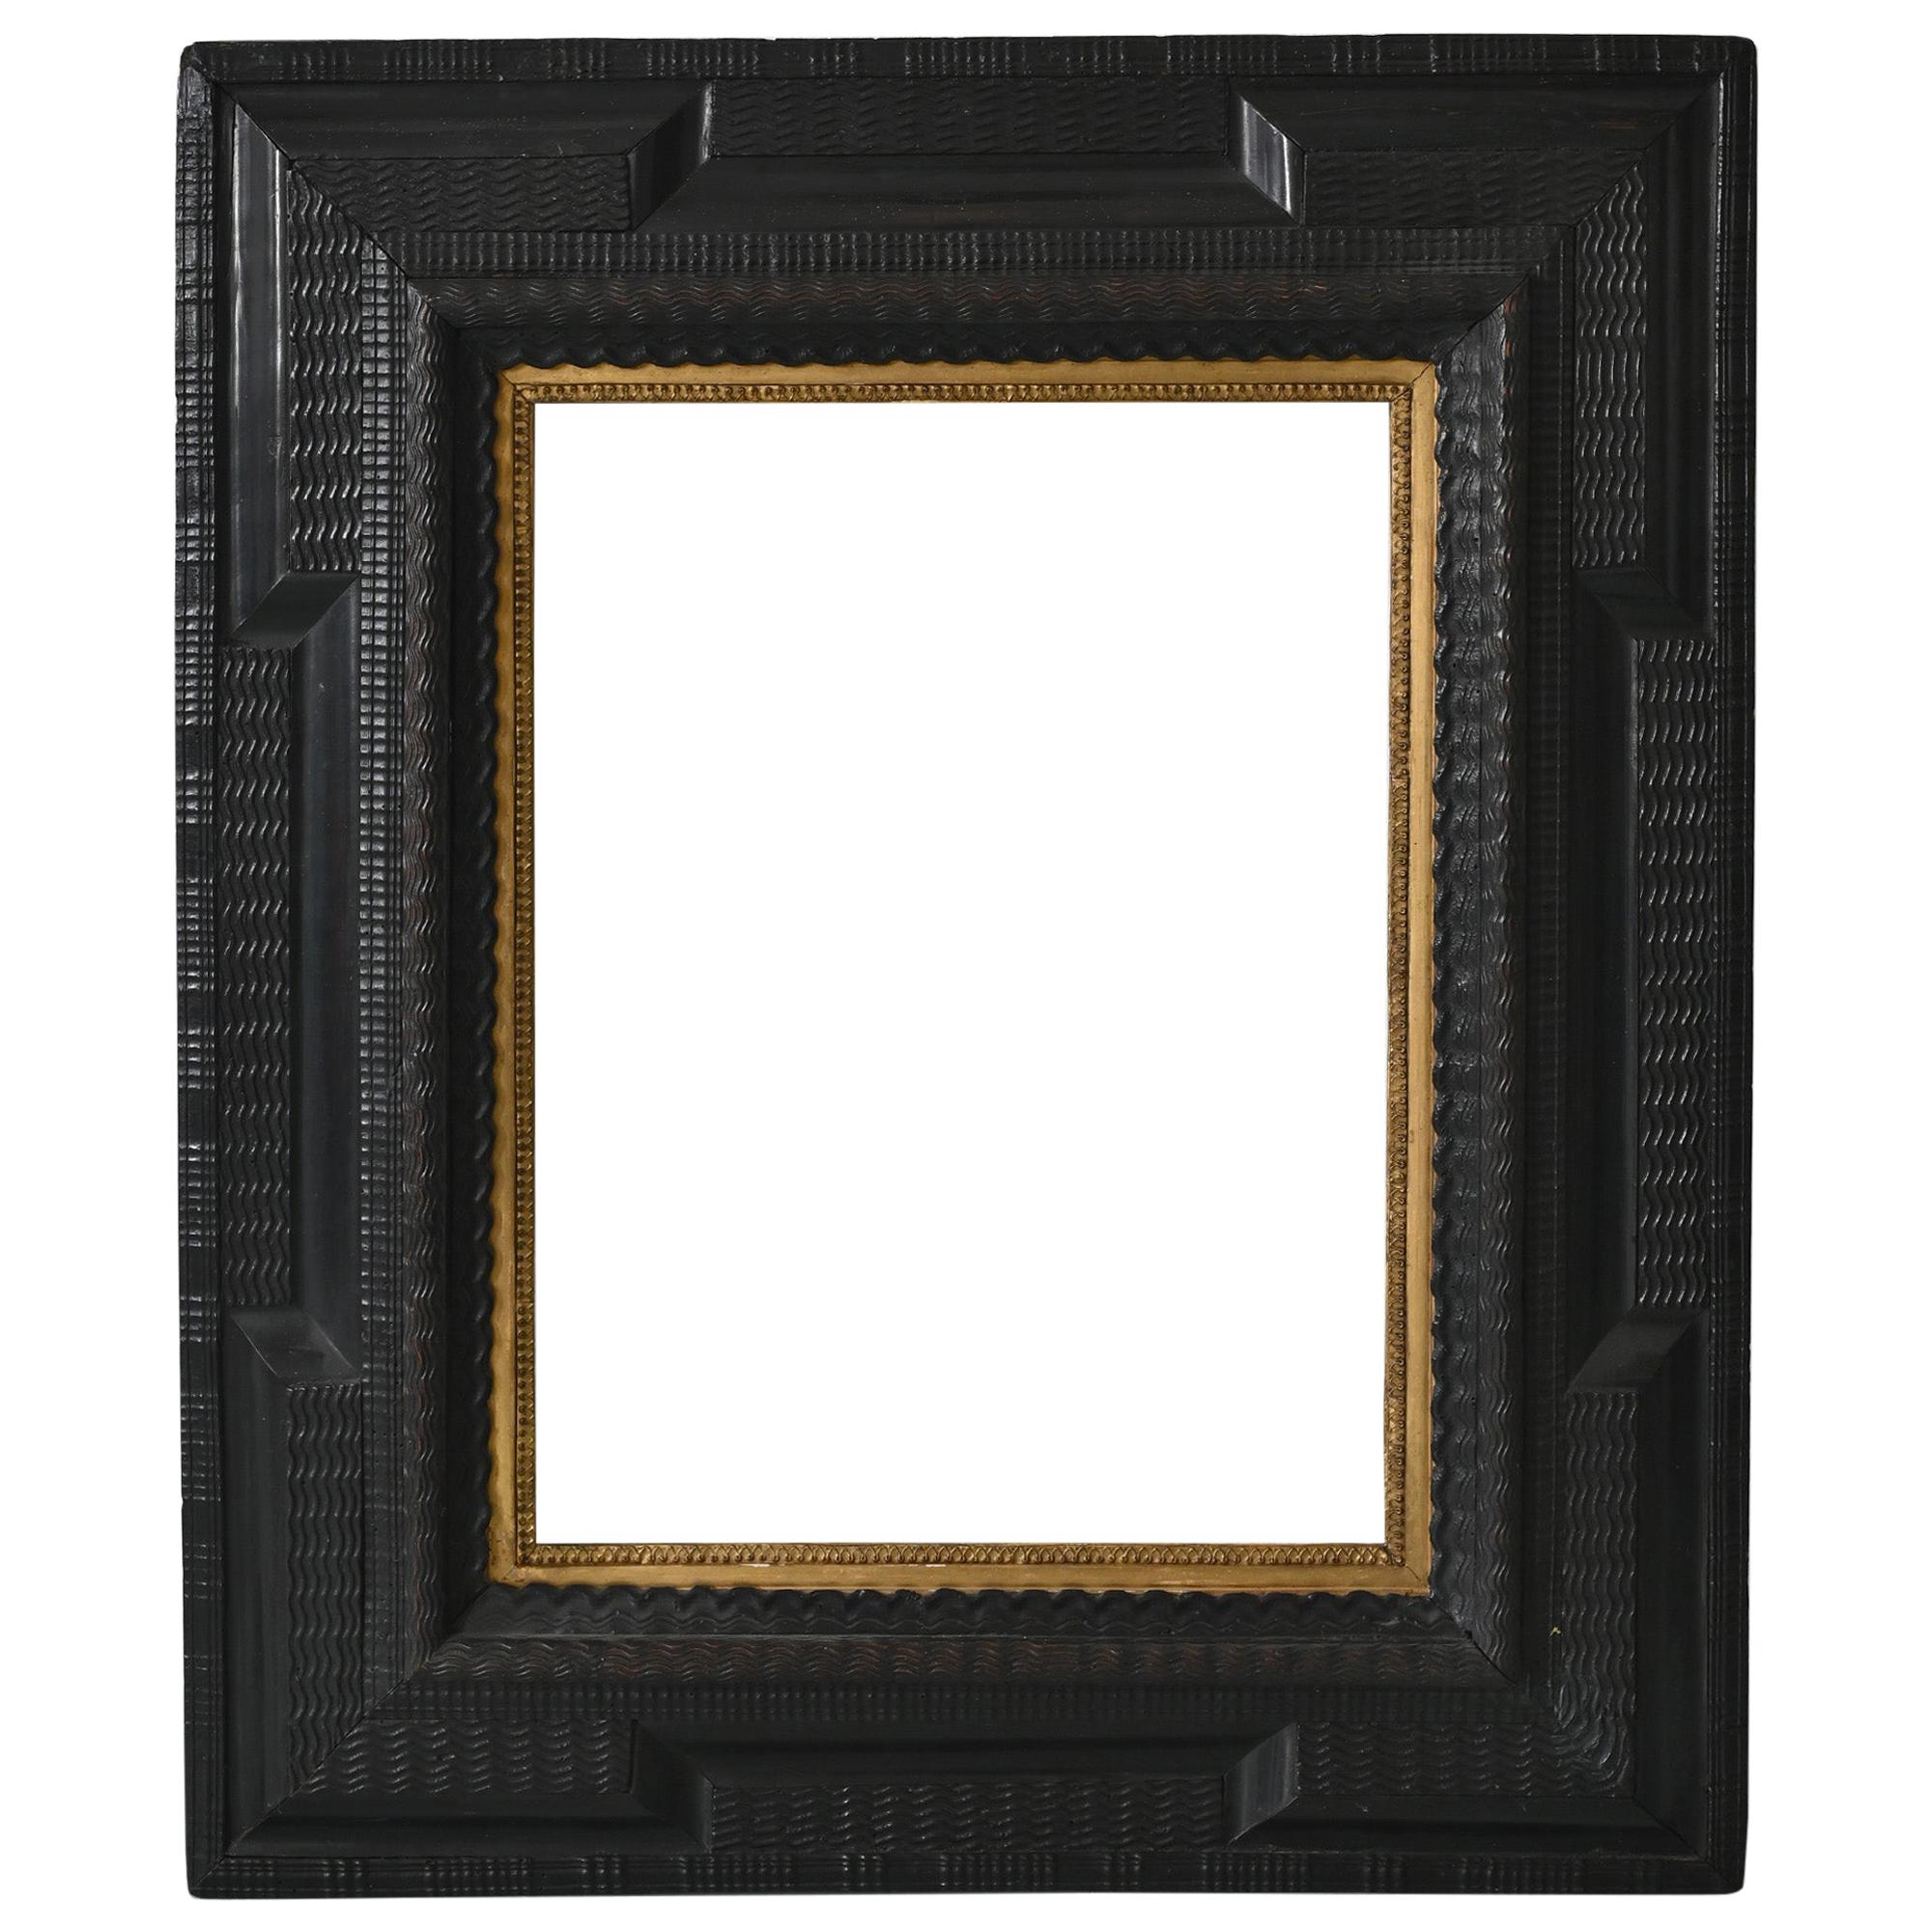 17th Picture Frame, Flame Strip Frame Netherlands Around 1650 Old Master Frame